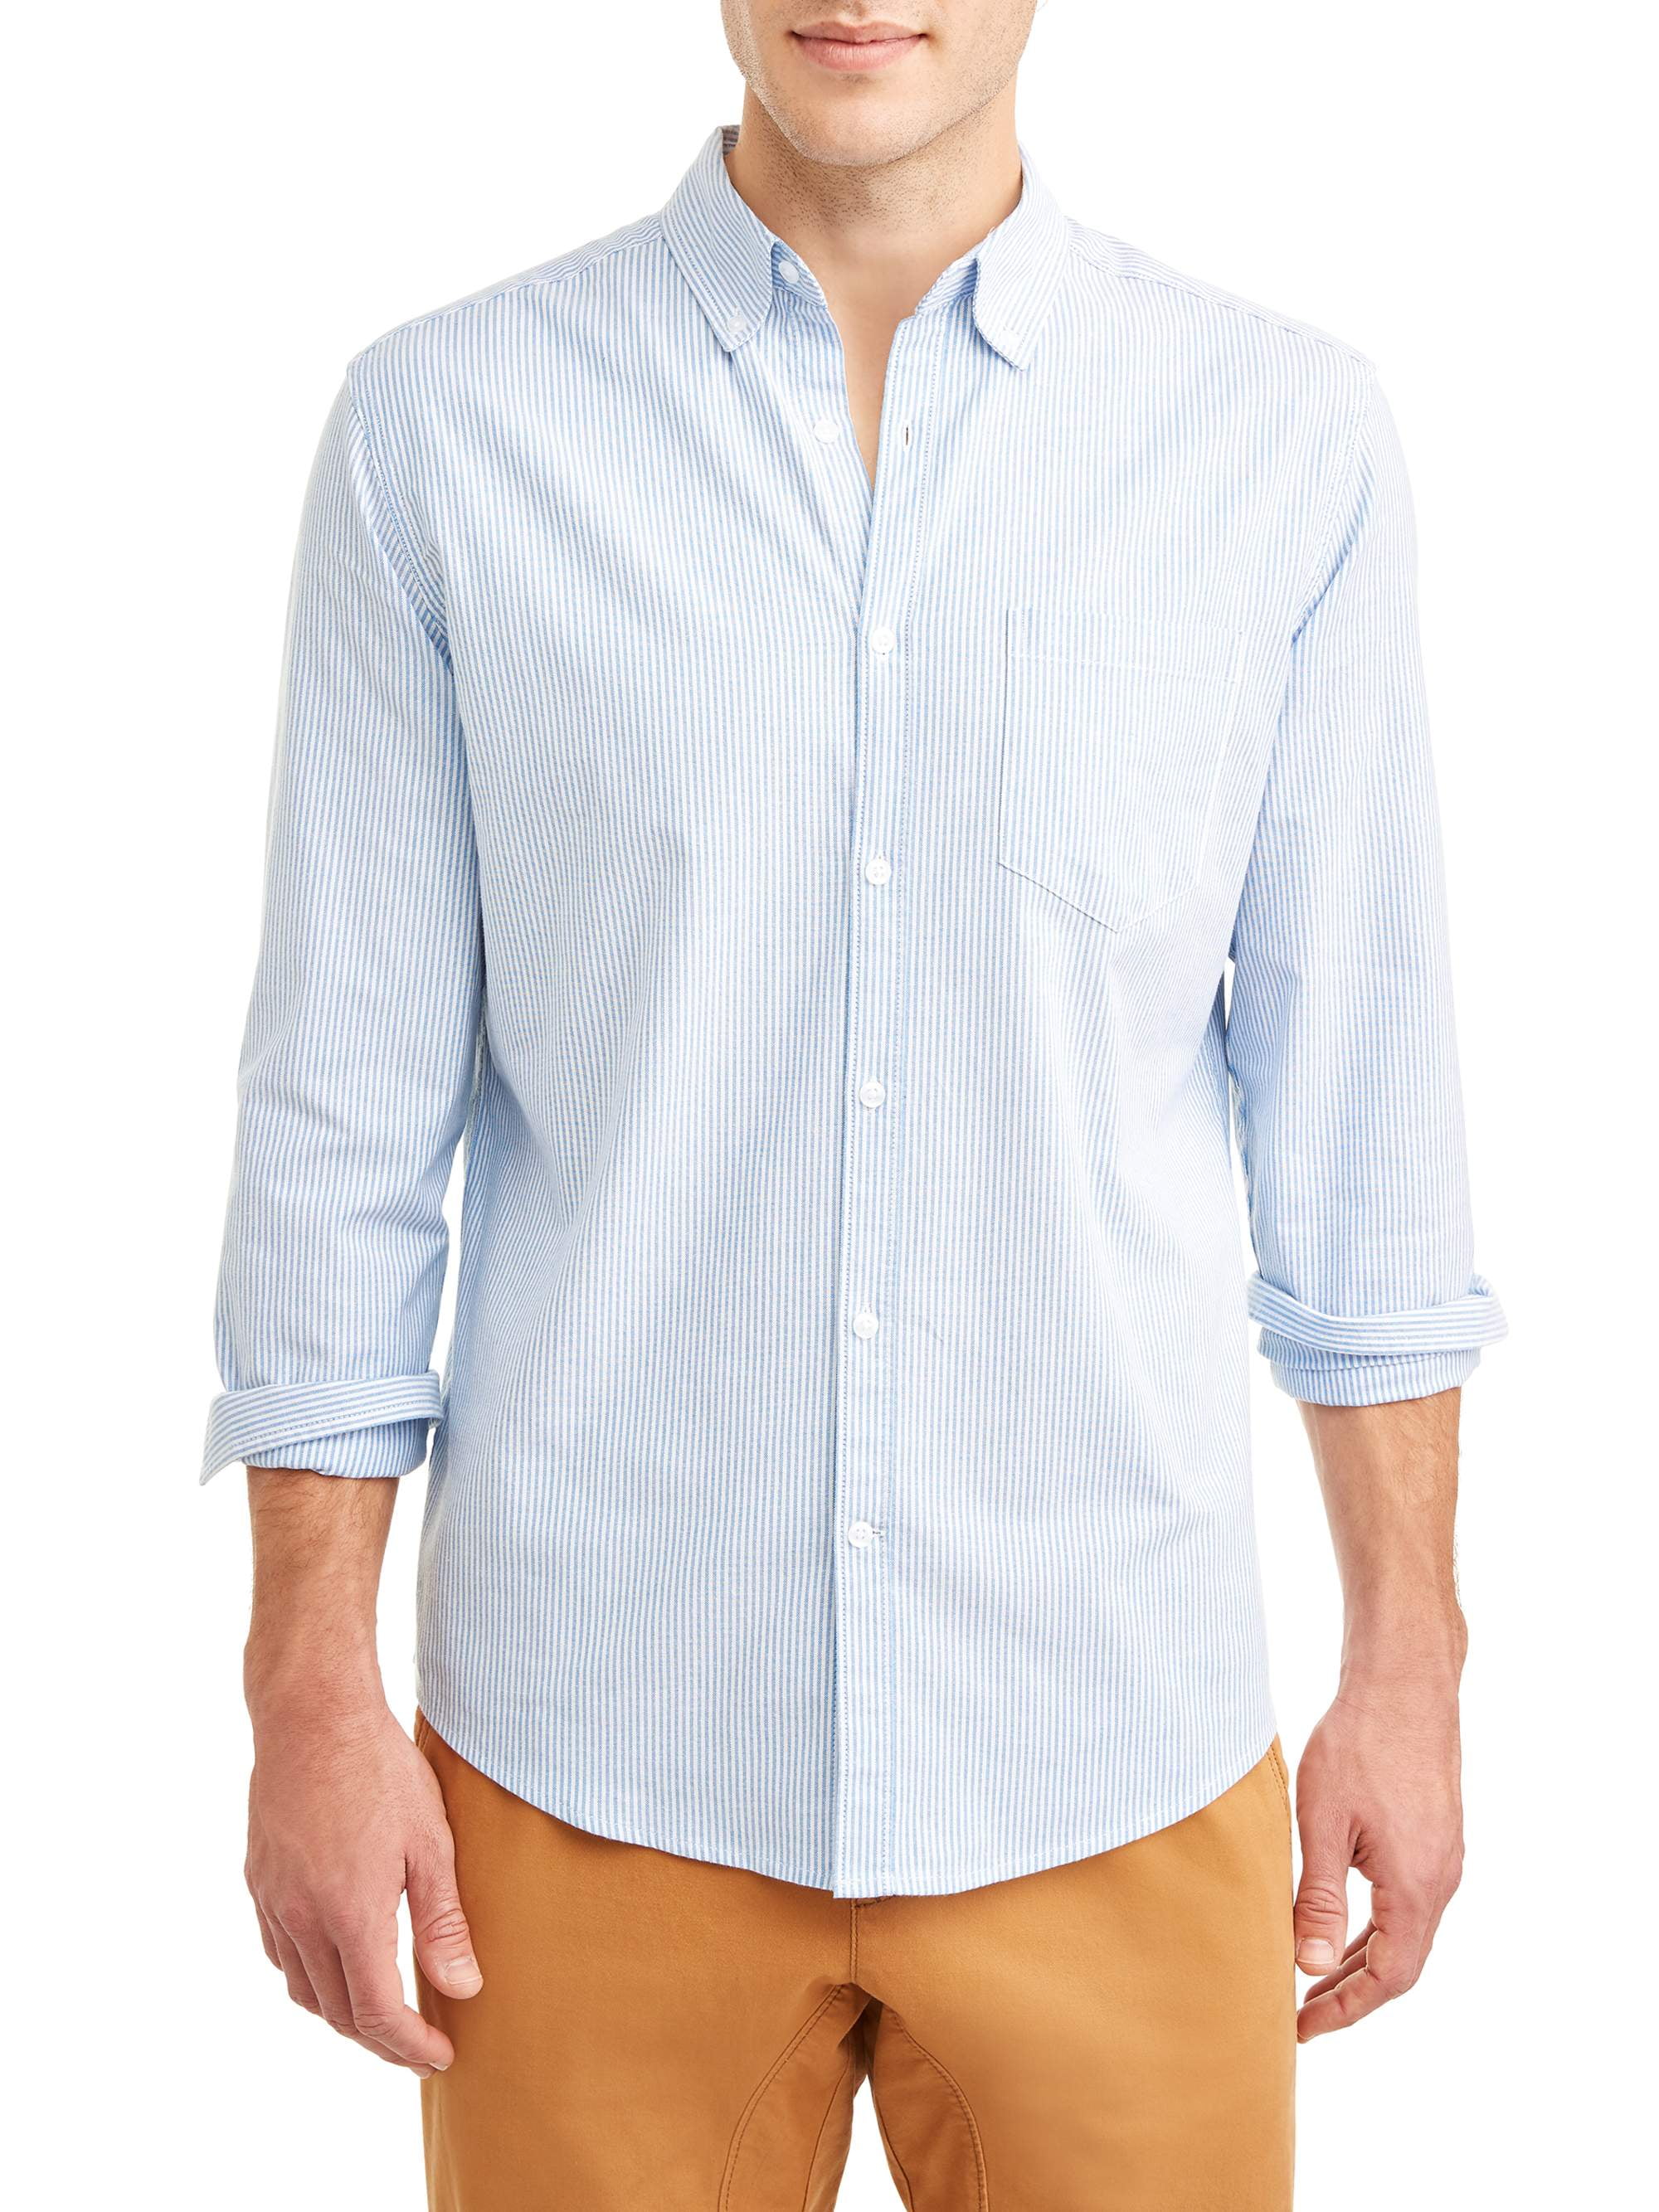 George Men's Slim Fit Oxford Long Sleeve Shirt - Walmart.com